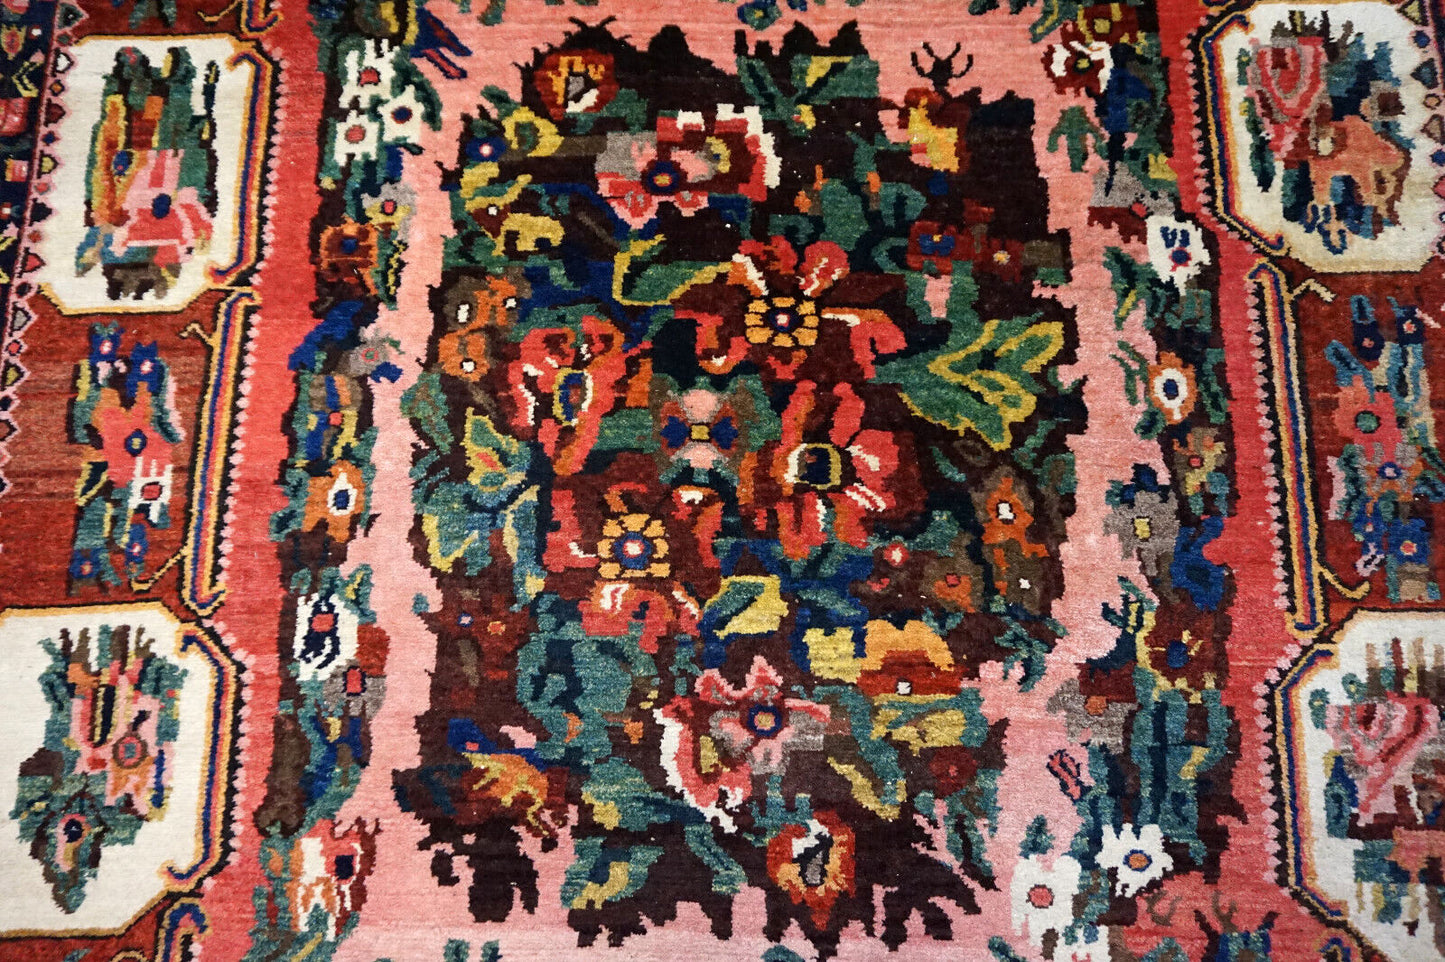 Intricate Details of Handmade Persian Carpet